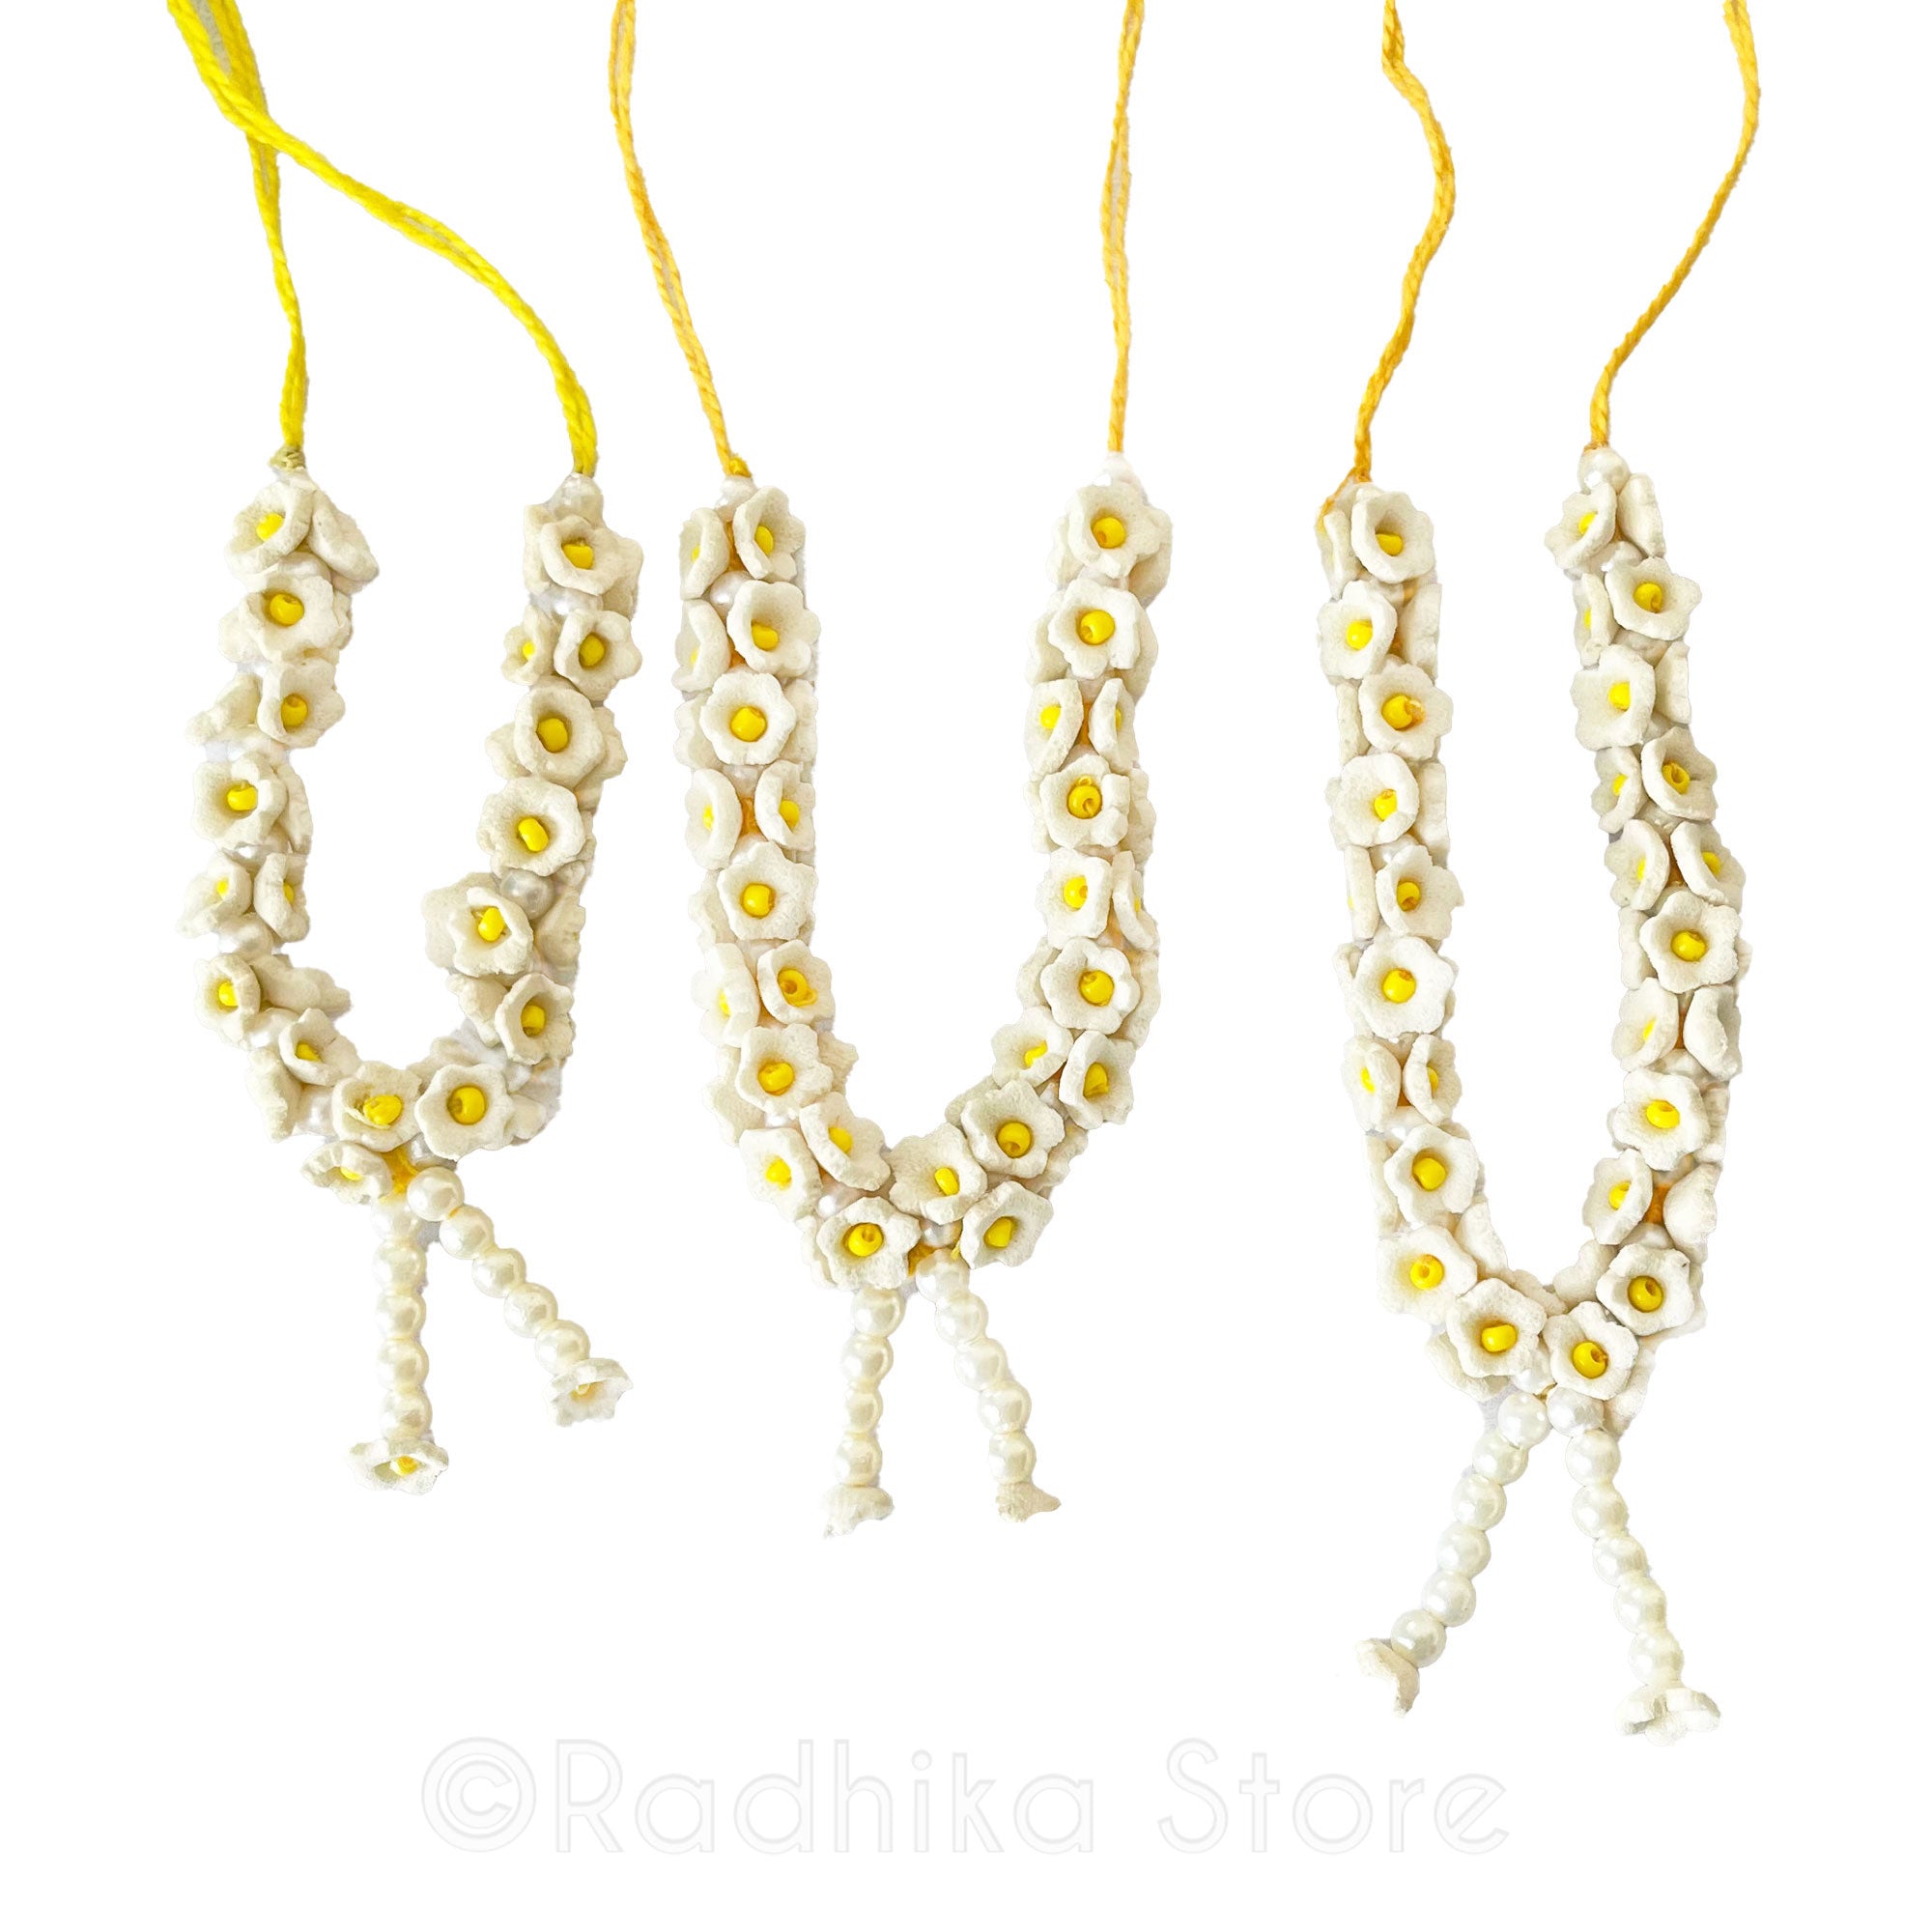 Cream White With Yellow Center - Deity Garland -Flower Jewelry - Choose Size -